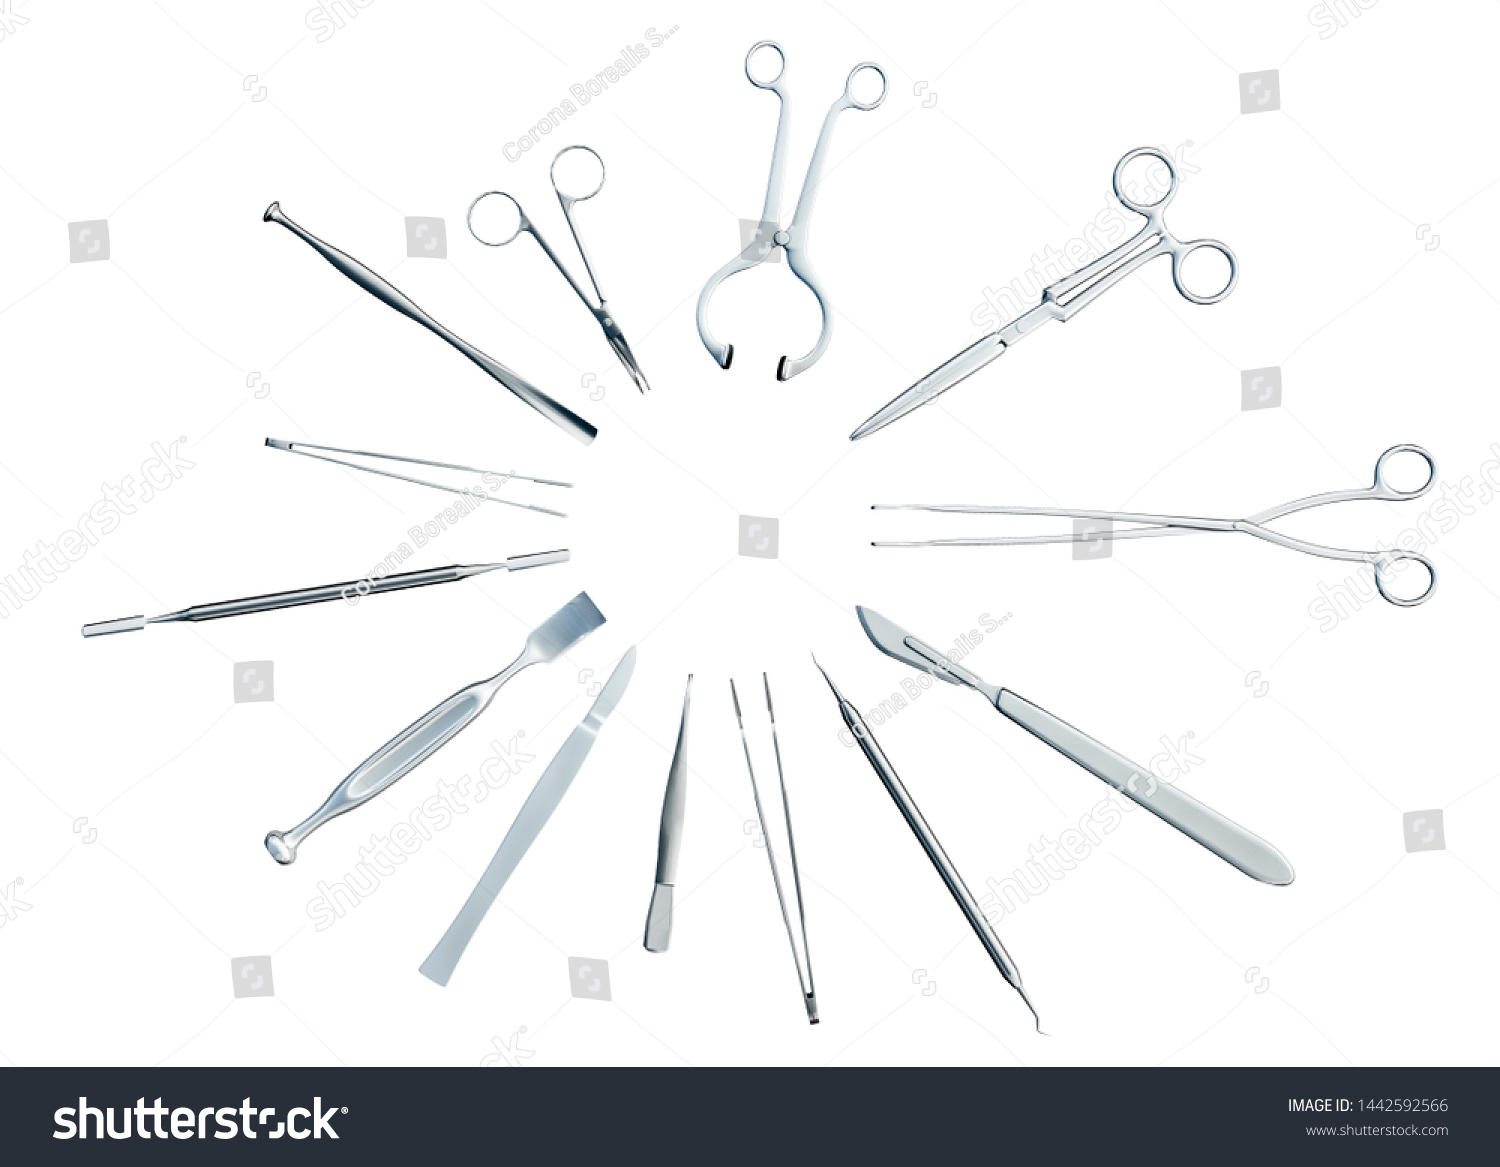 9,721 Surgical sterilization Stock Illustrations, Images & Vectors ...